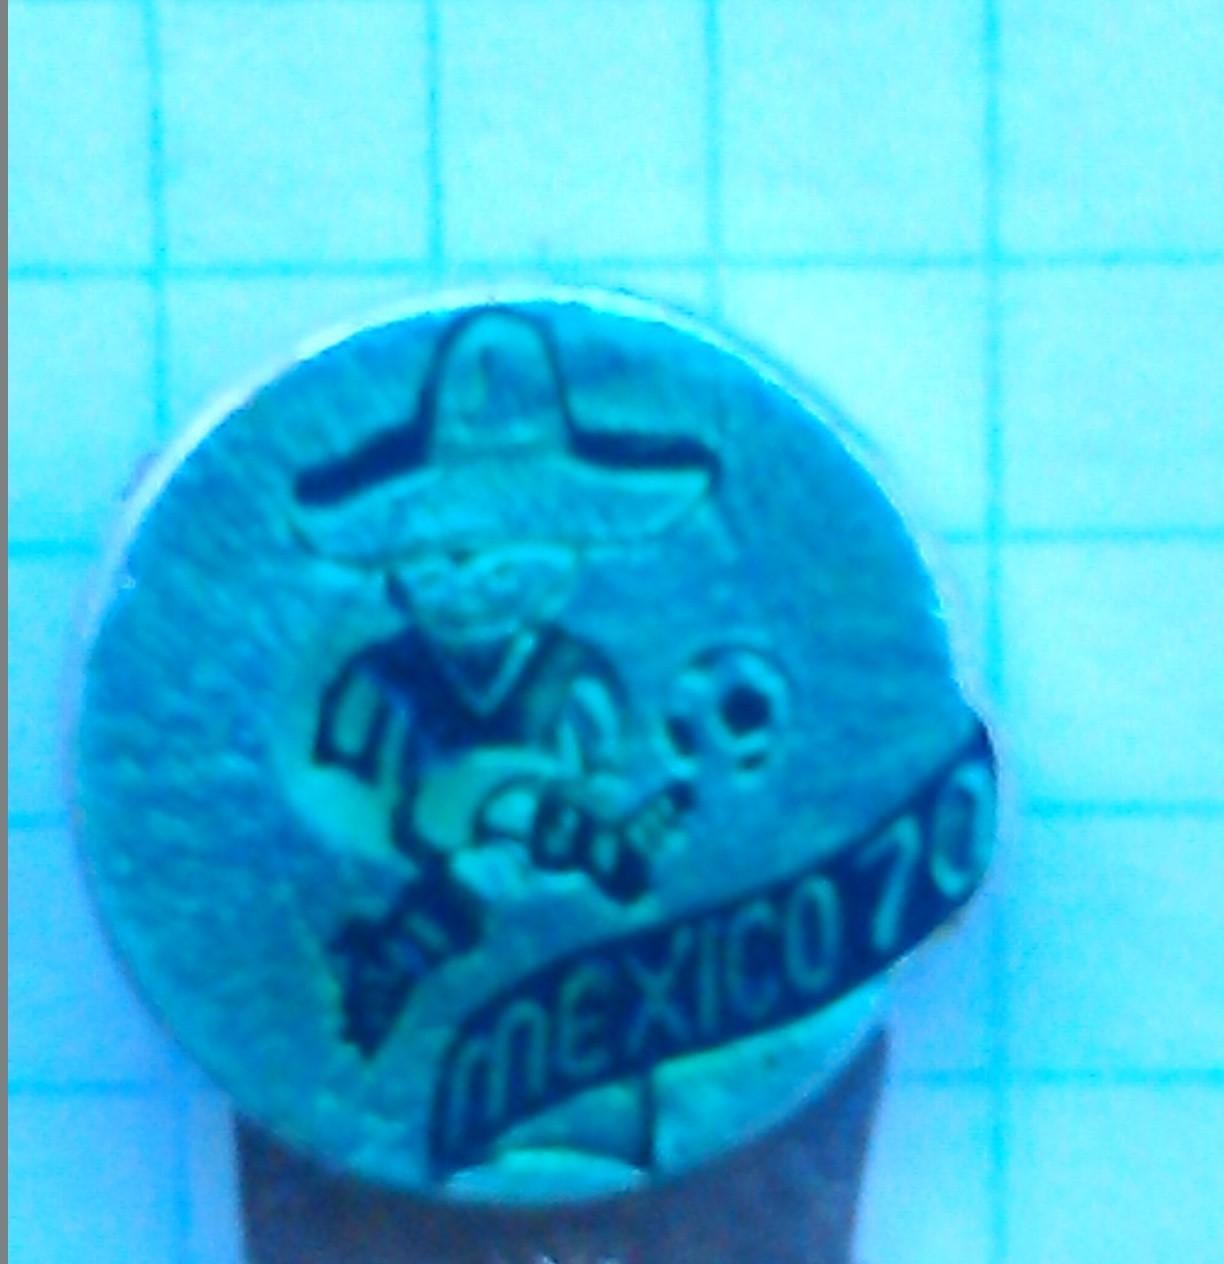 Футбольн. значок. MEXICO (Мехико) 1970. Footbal Badge. Оптом скидки до 50%!